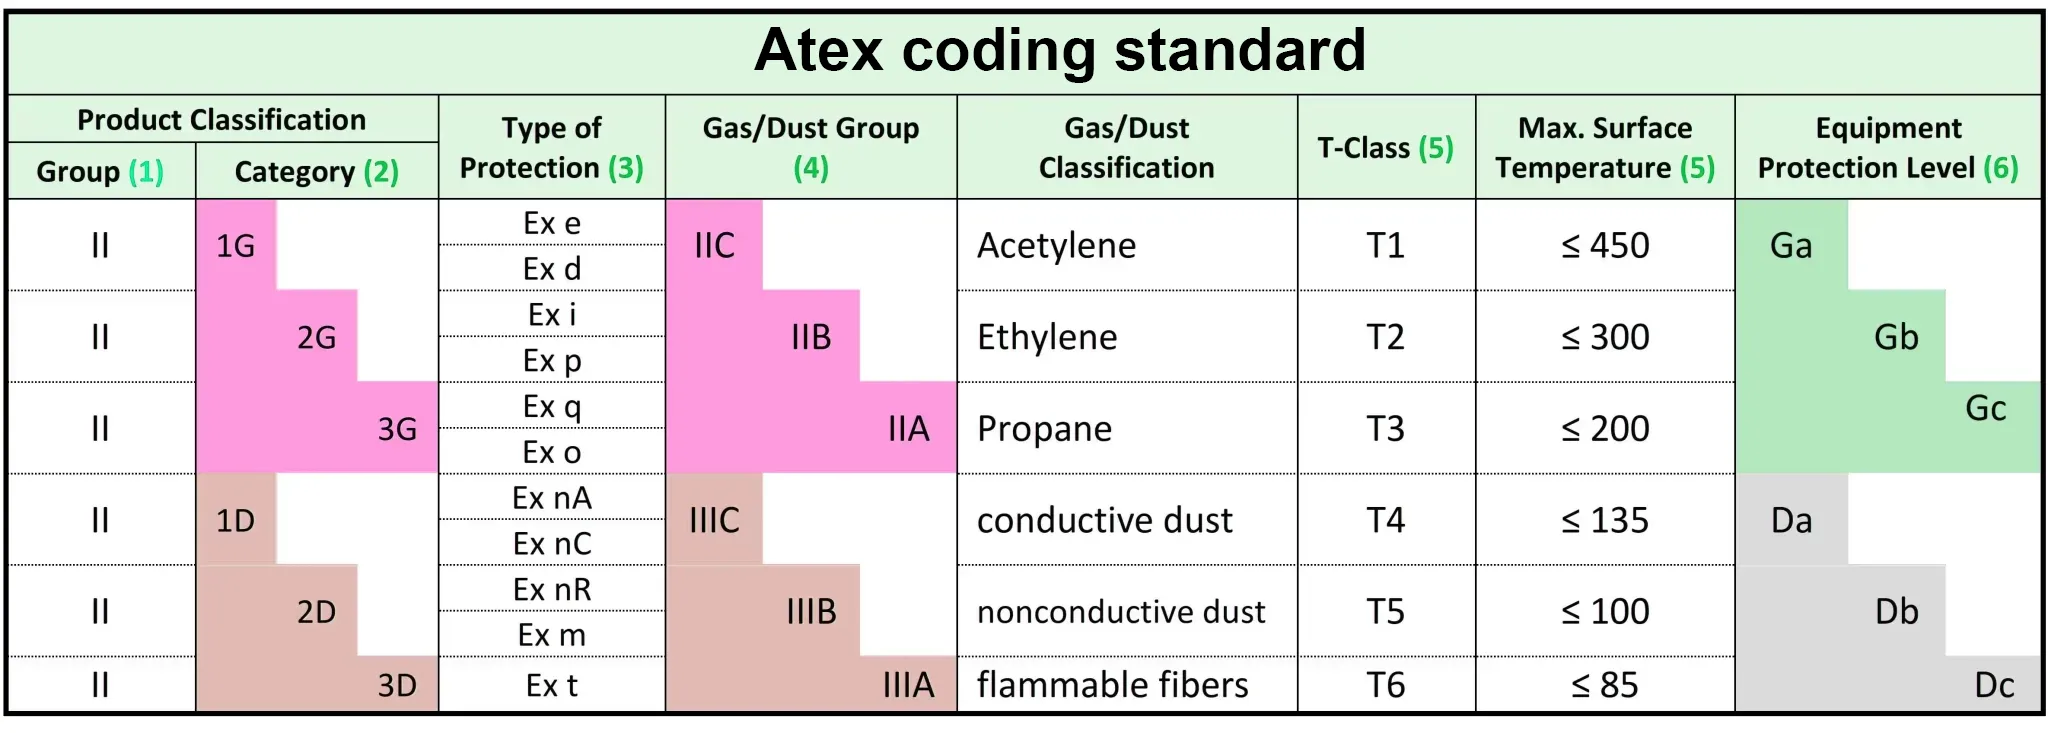 atex-coding-standard